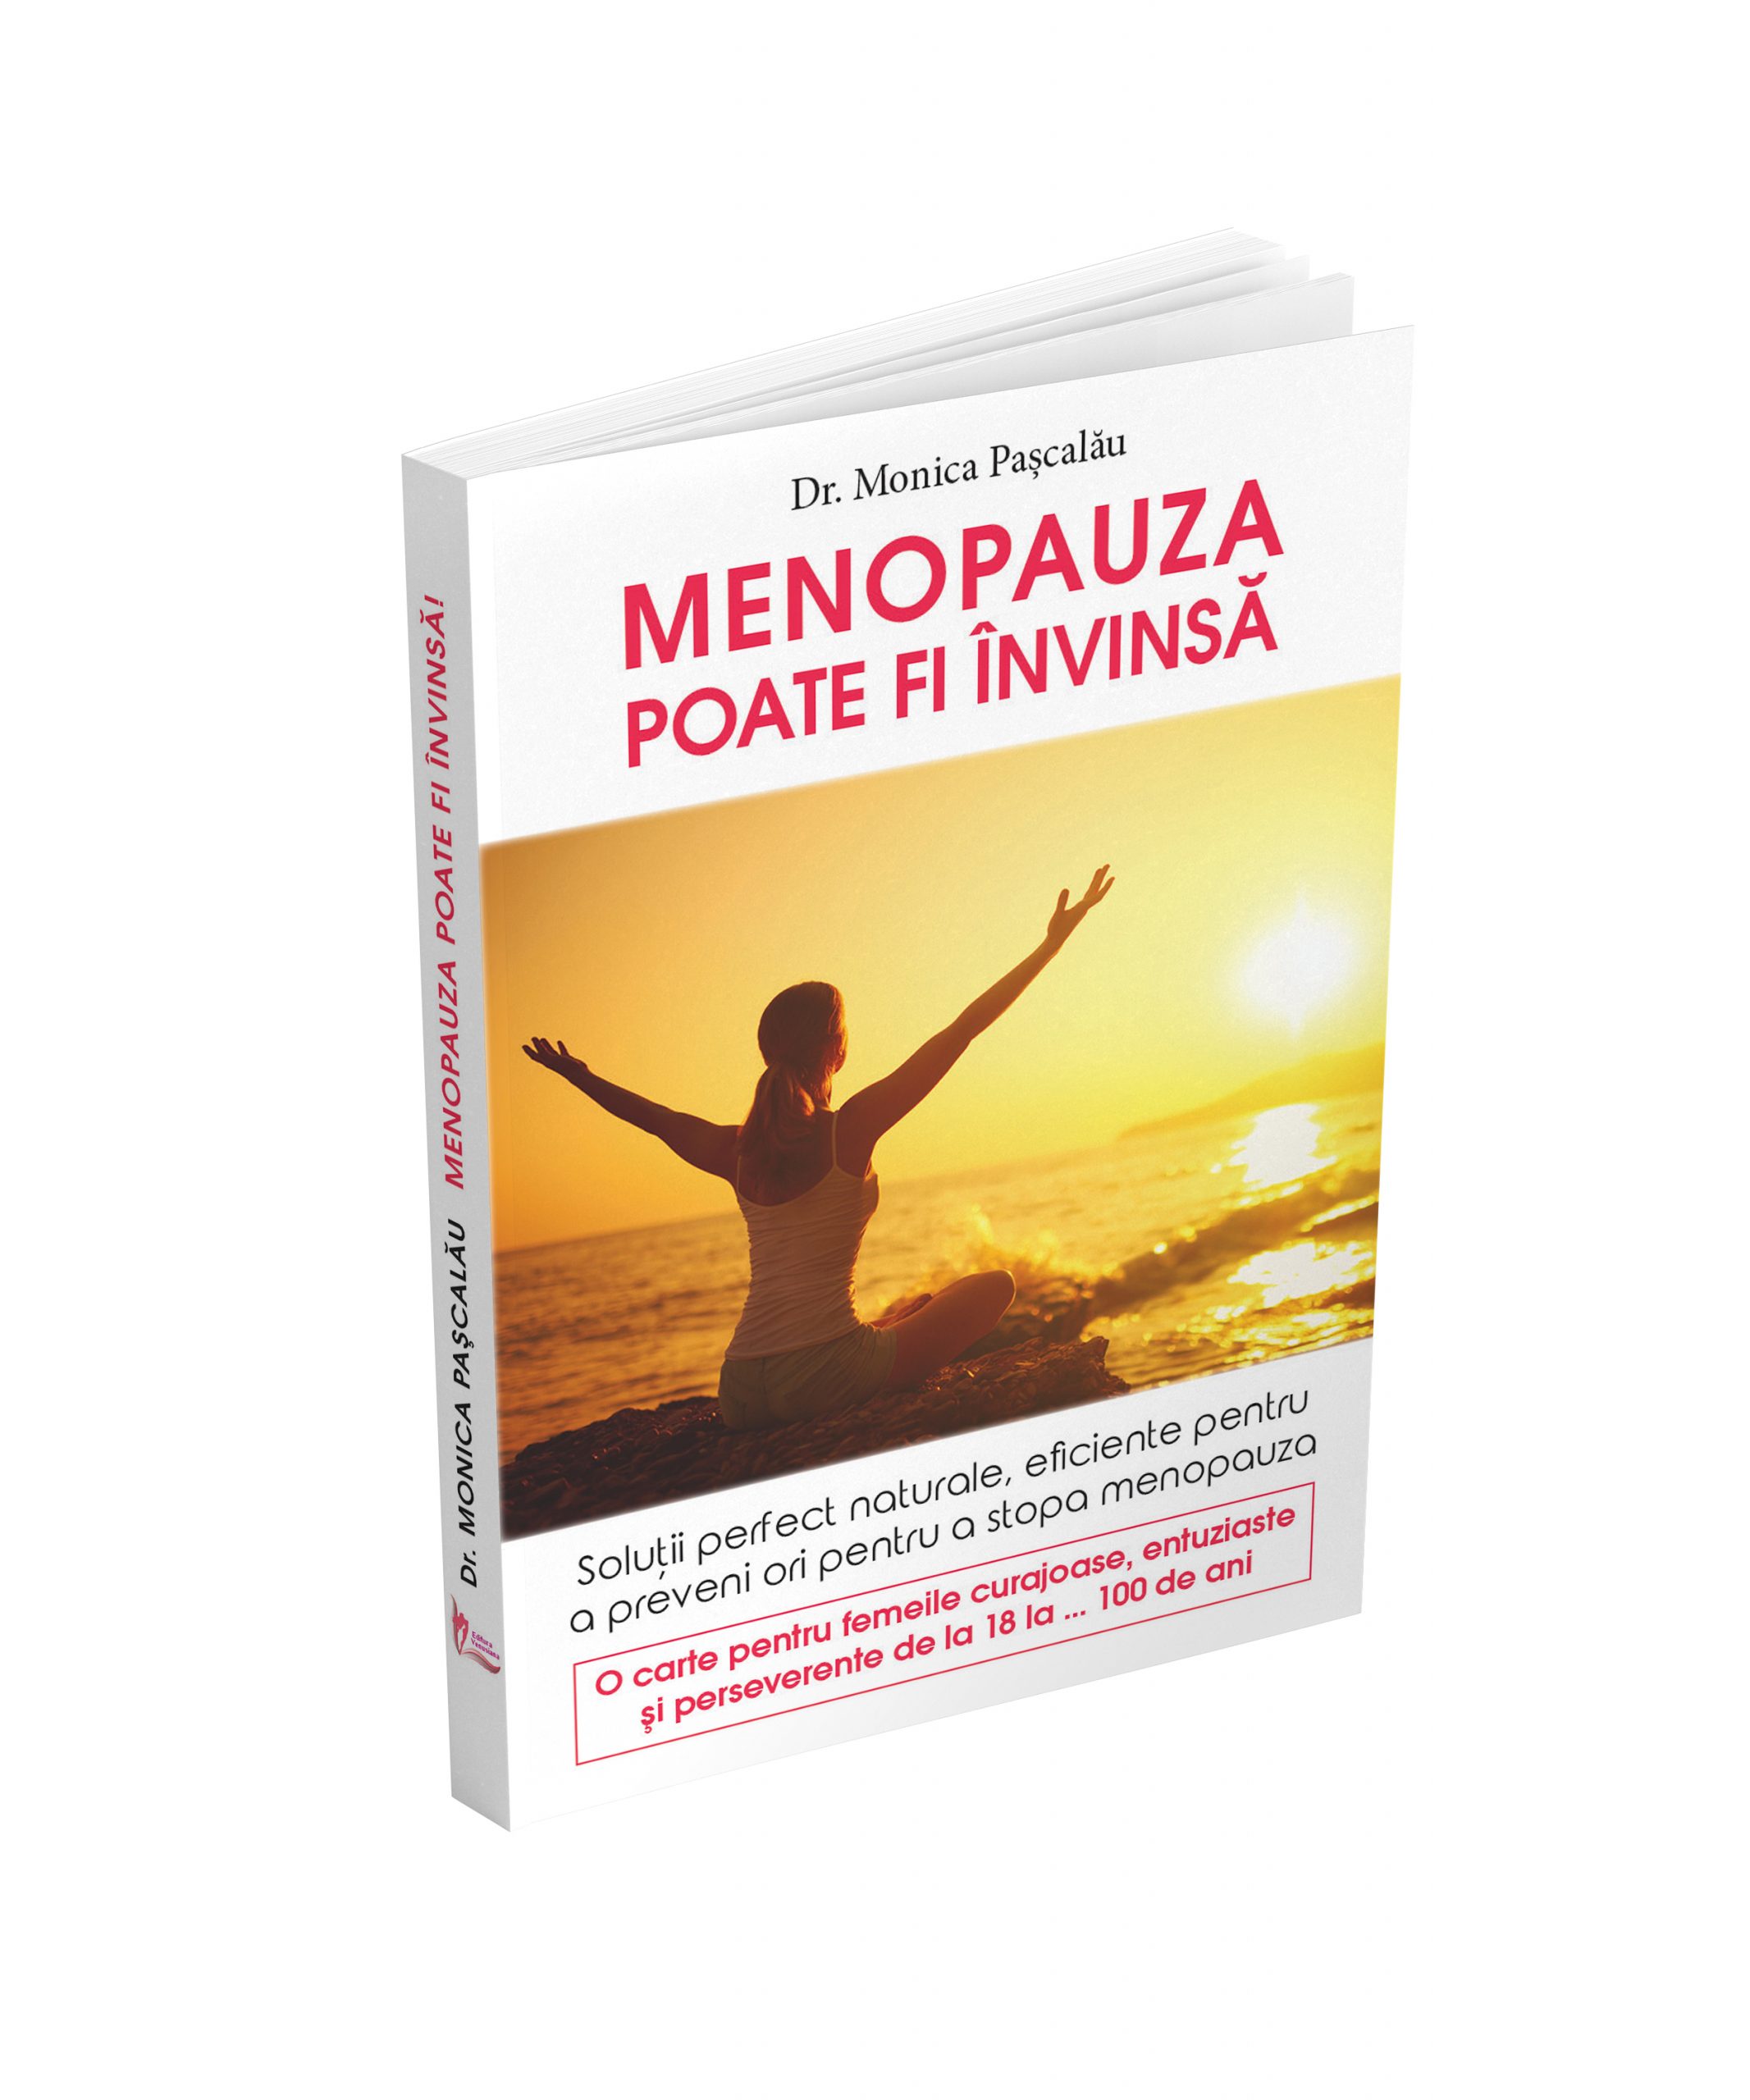 Dr. Monica Pascalau – Menopauza poate fi invinsa